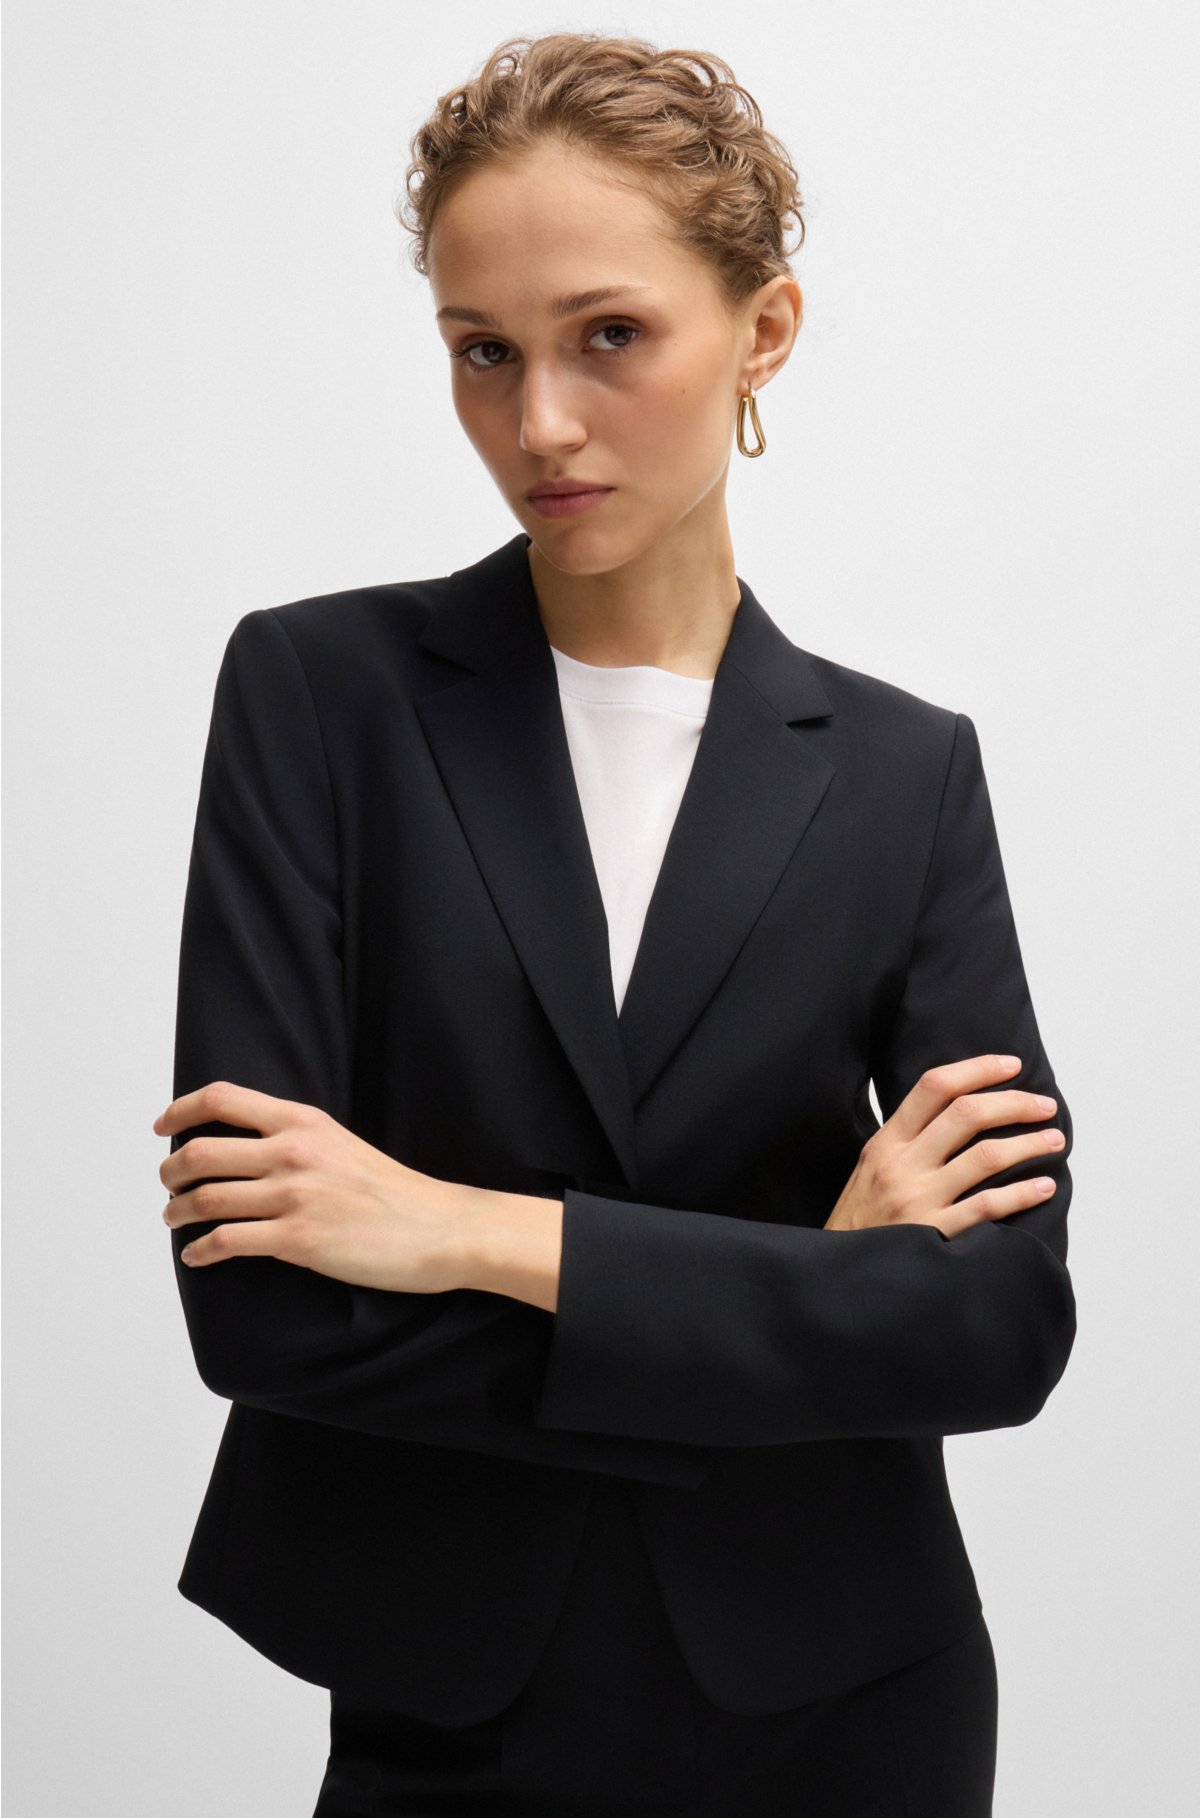 Regular-fit button-up jacket in virgin wool, Black